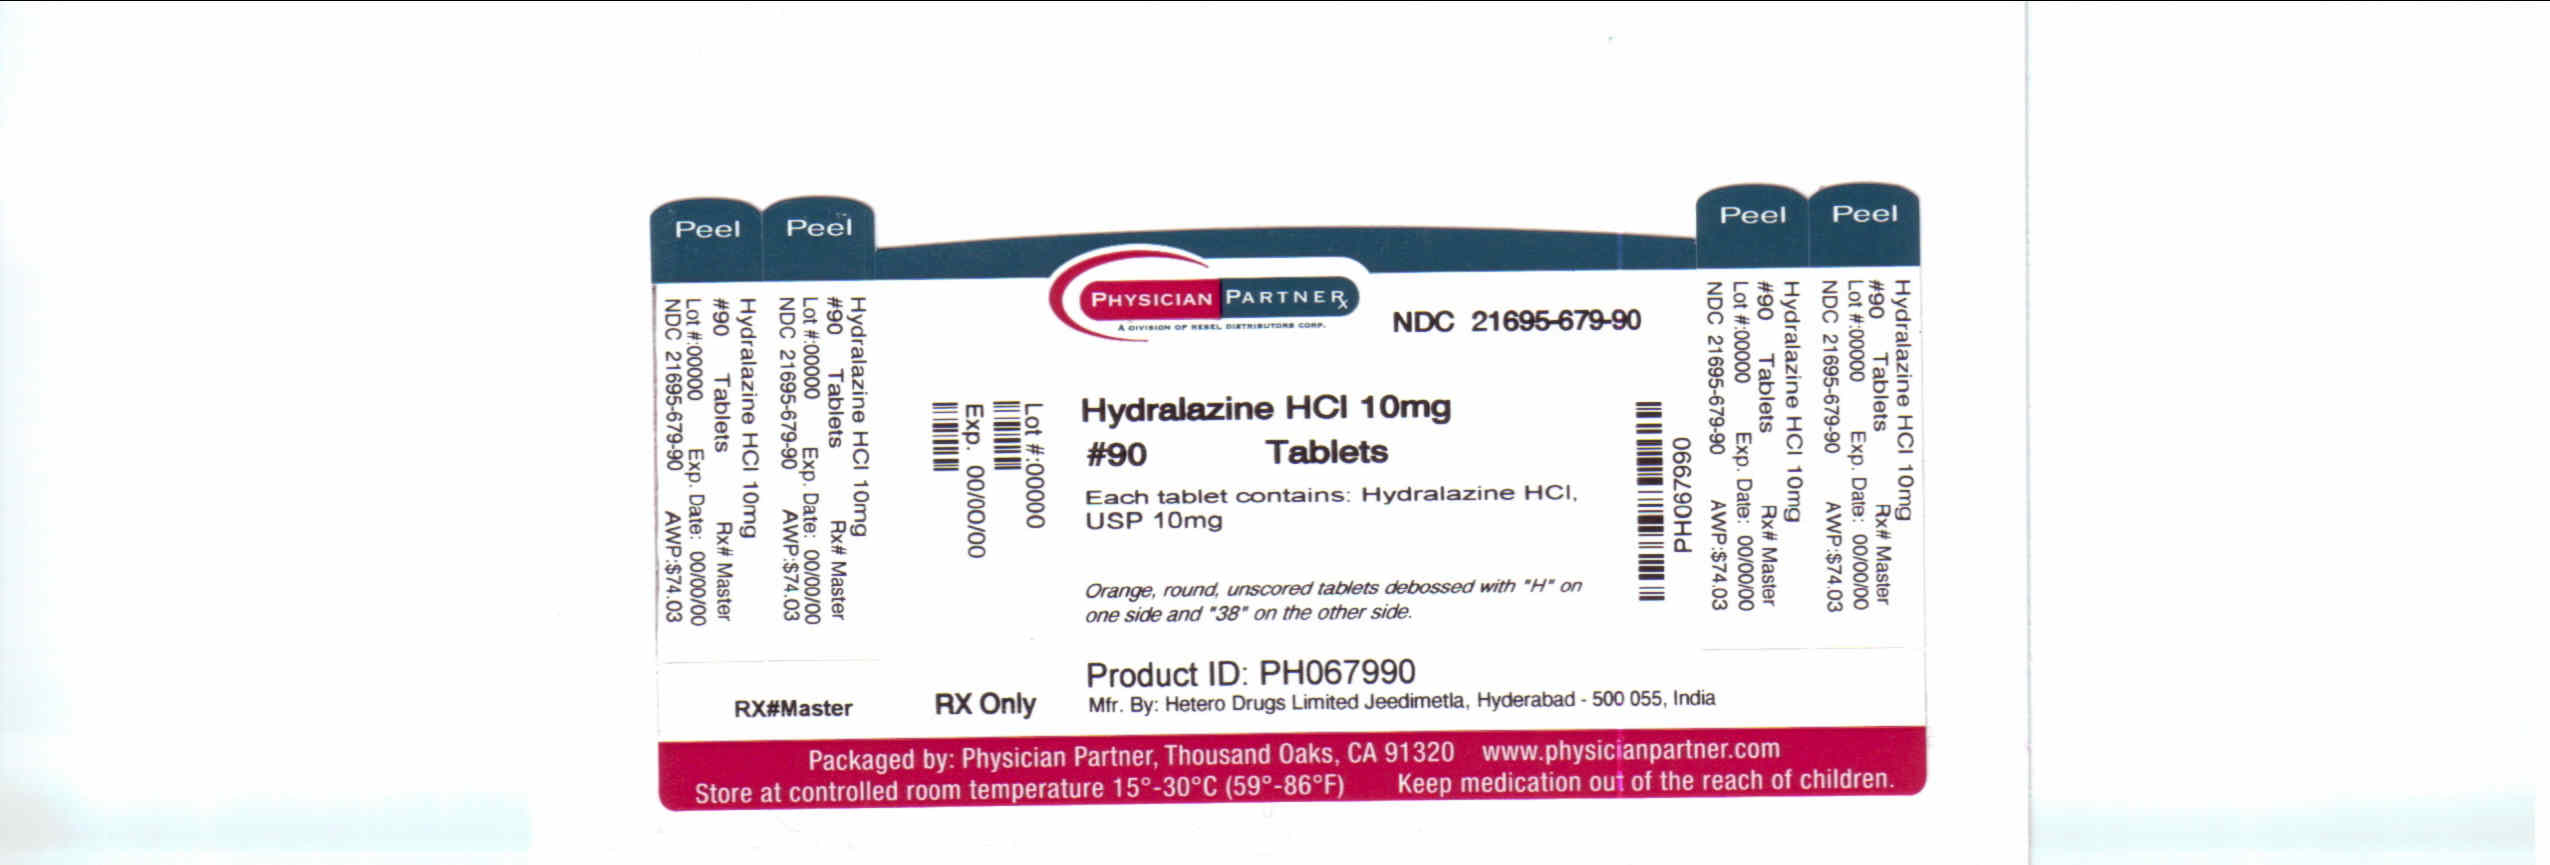 Hydrazaline HCL 10mg